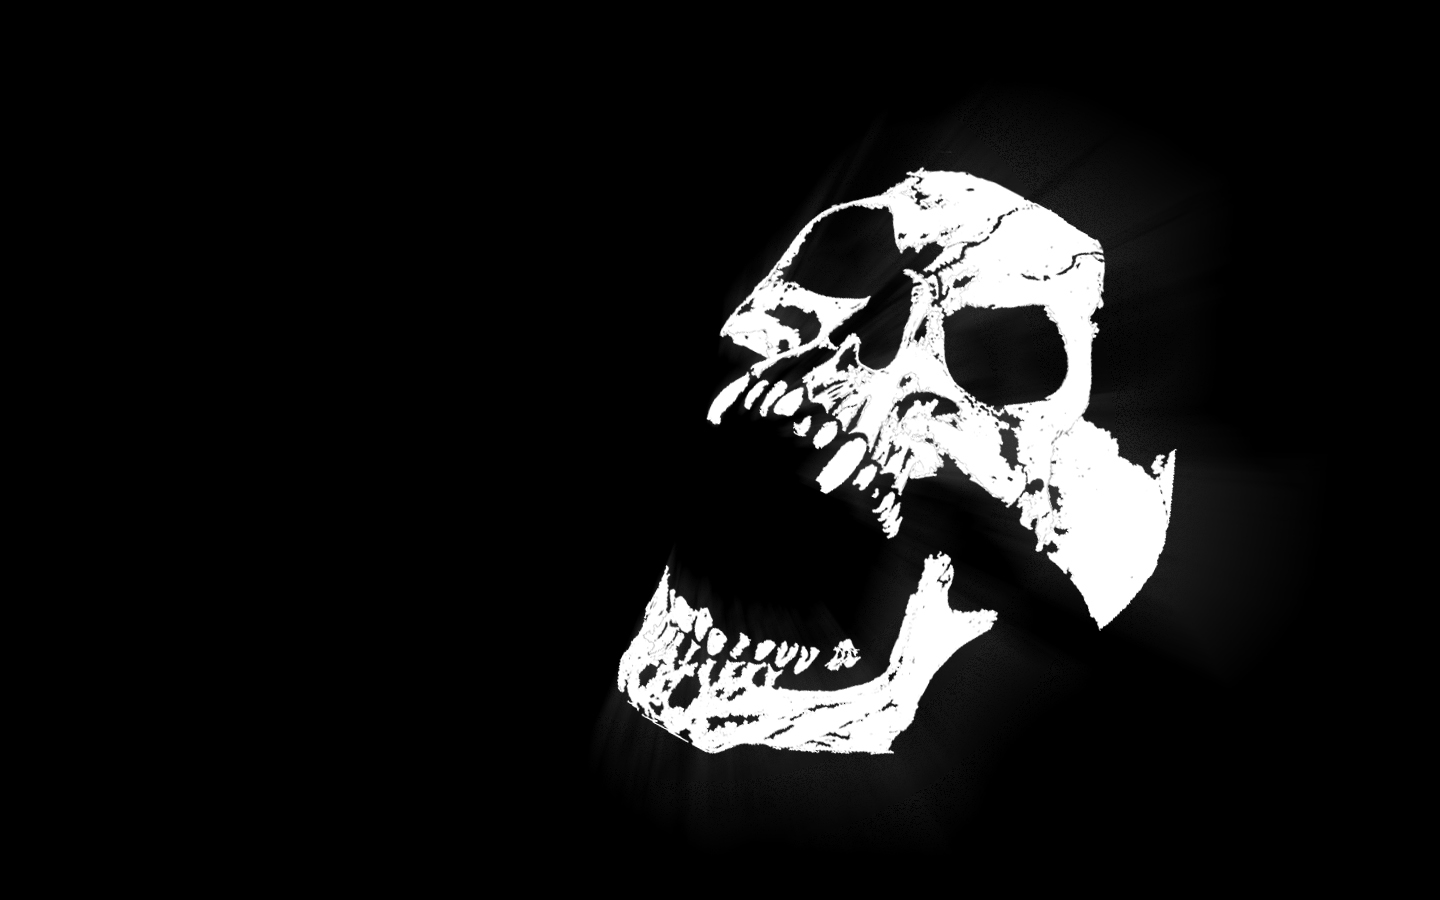 Skull Black Background - WallpaperSafari